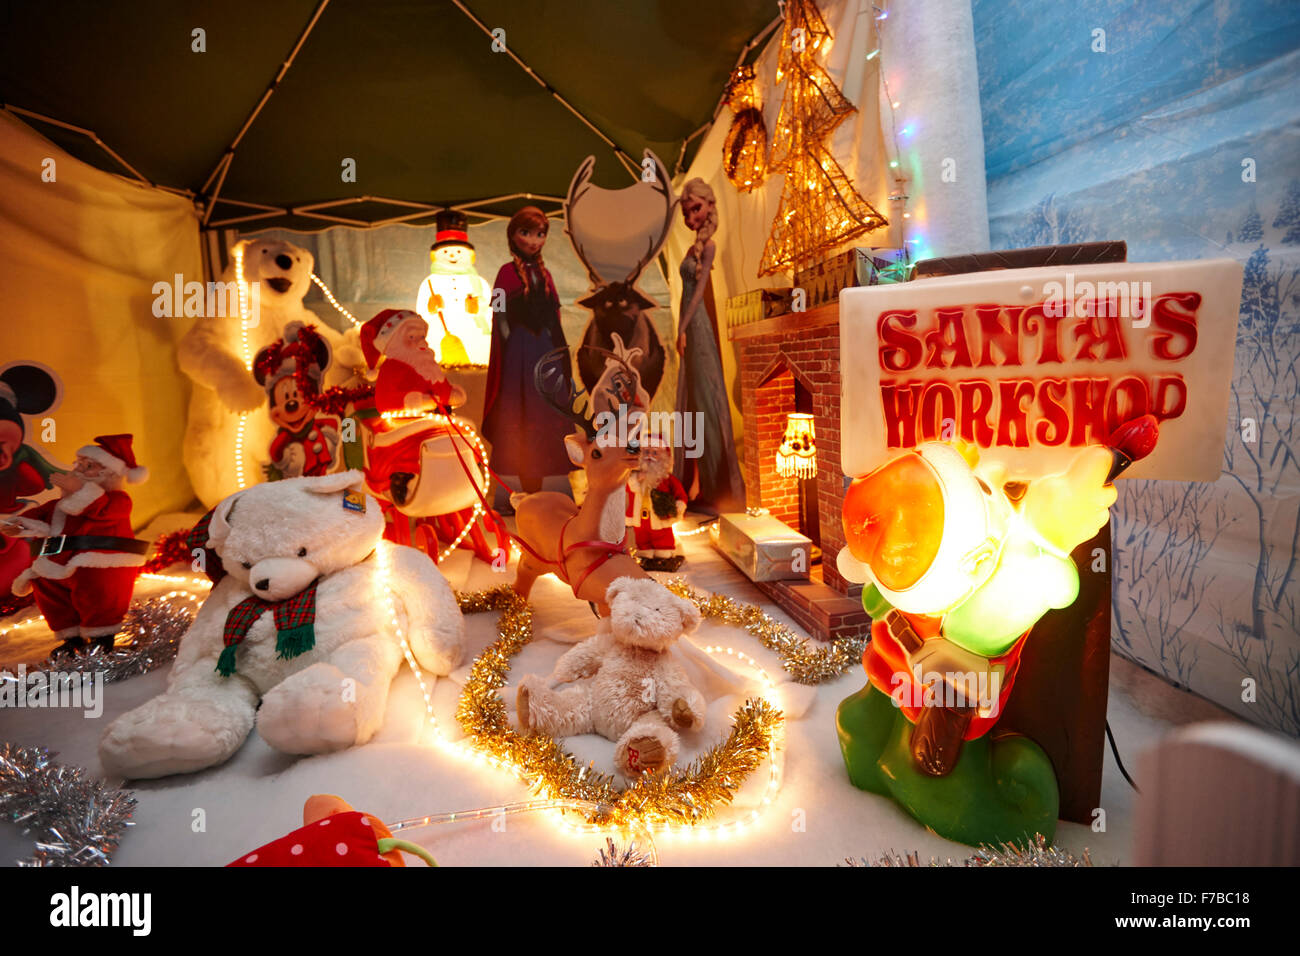 Santas workshop display in a temporary seasonal santa grotto in the uk Stock Photo